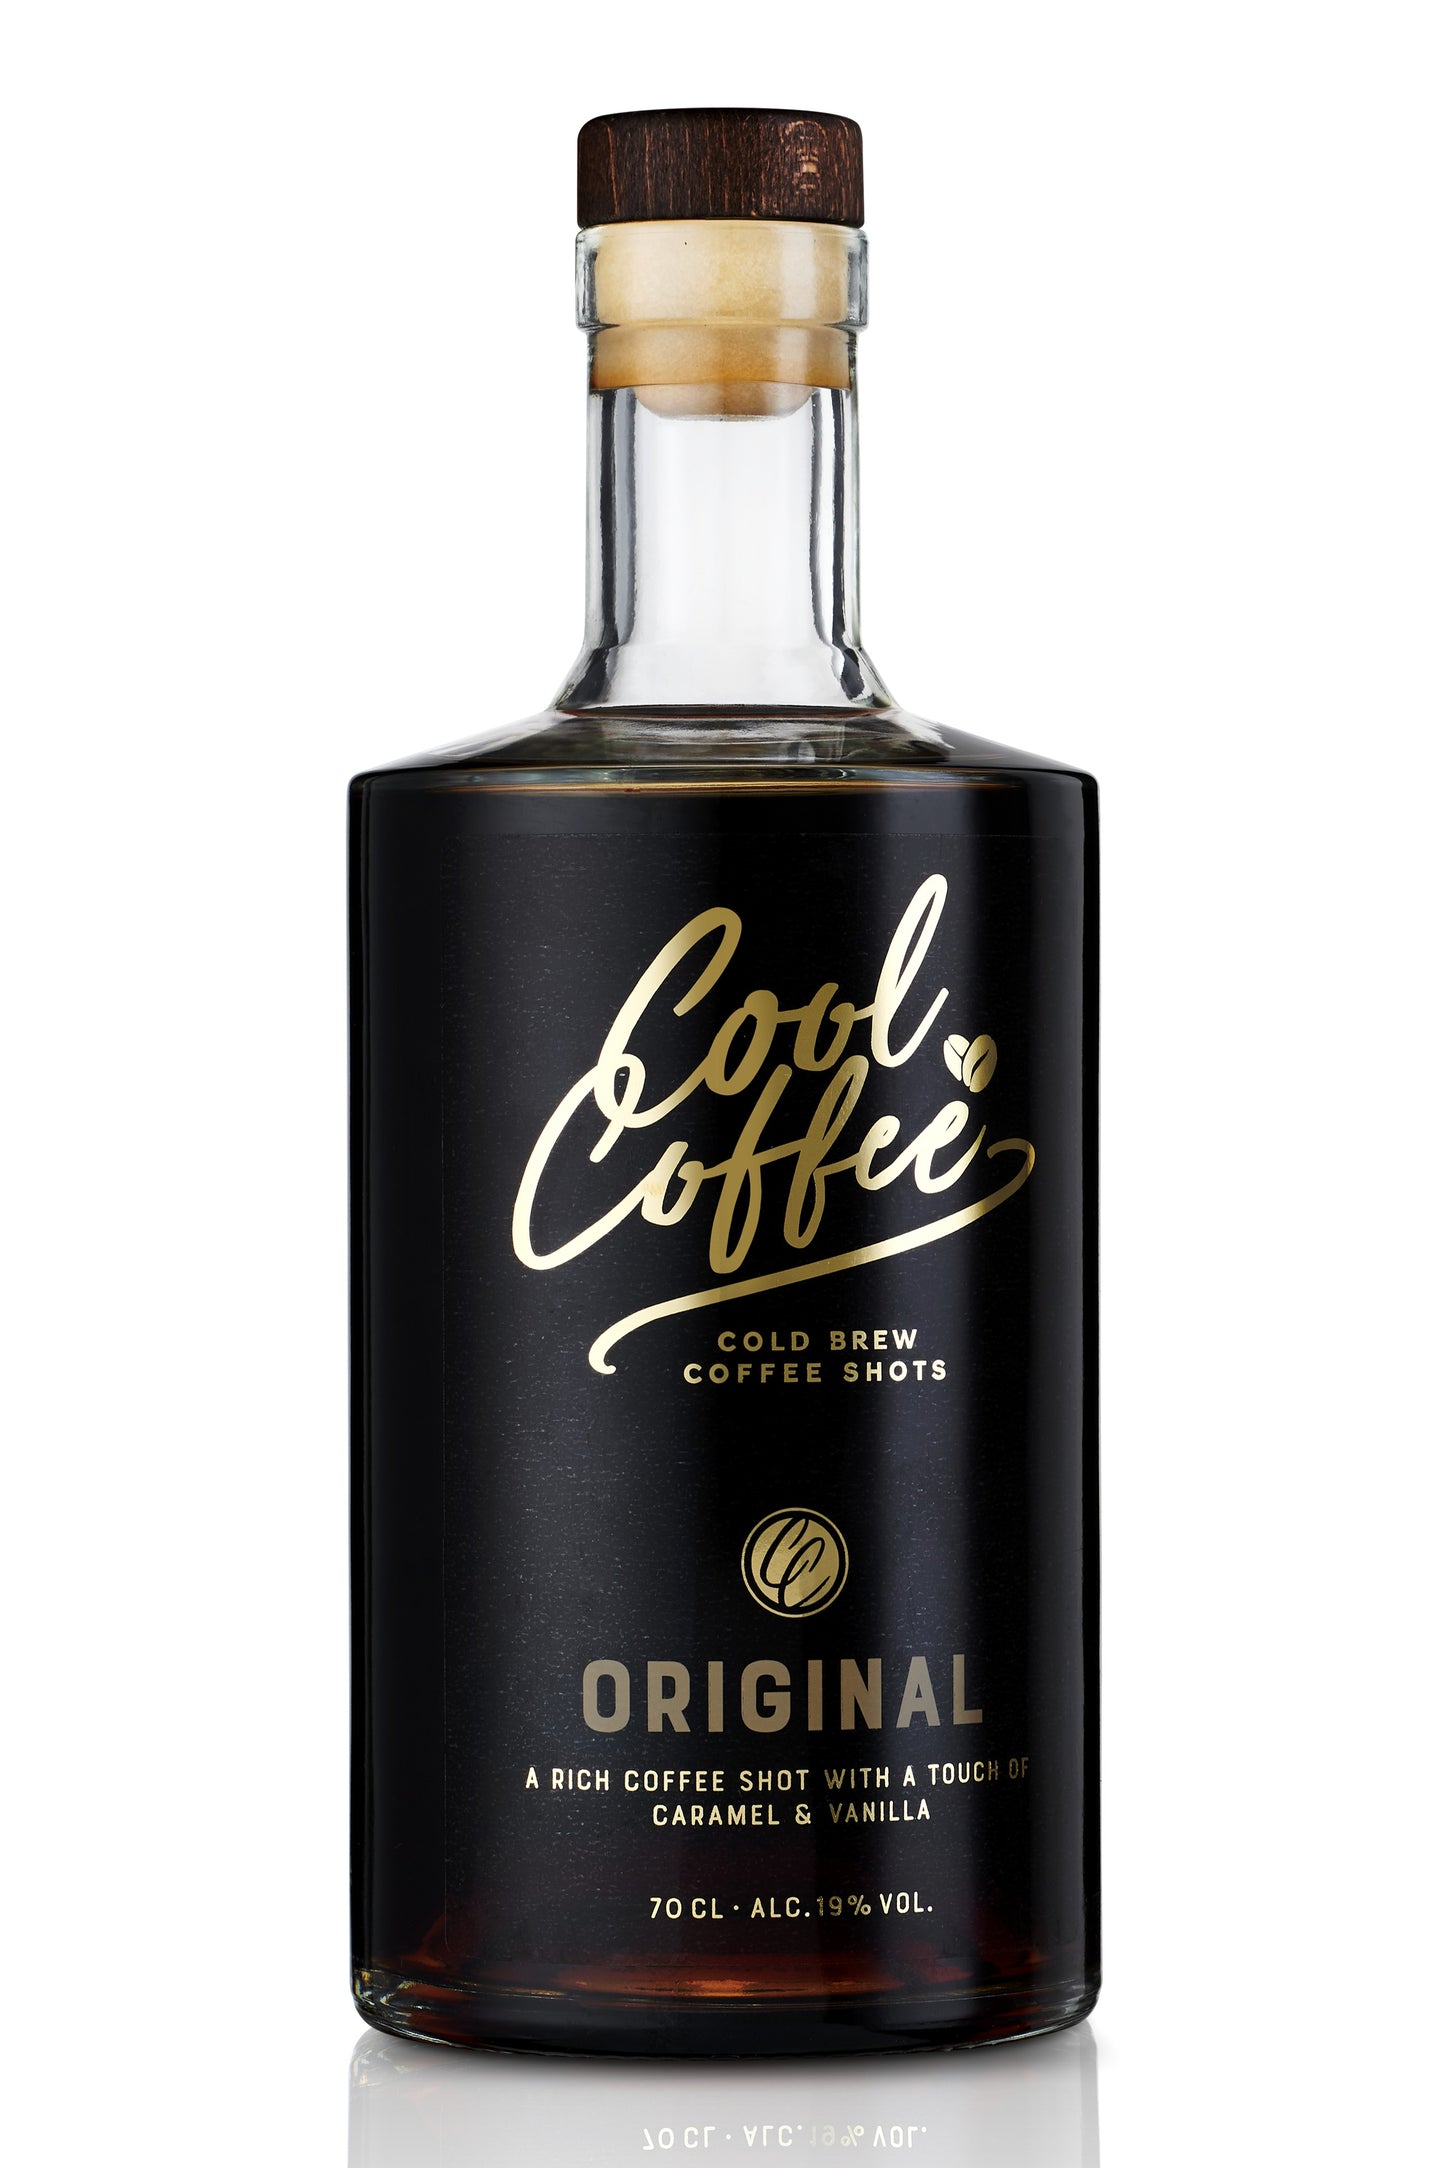 Cool Coffee - Original